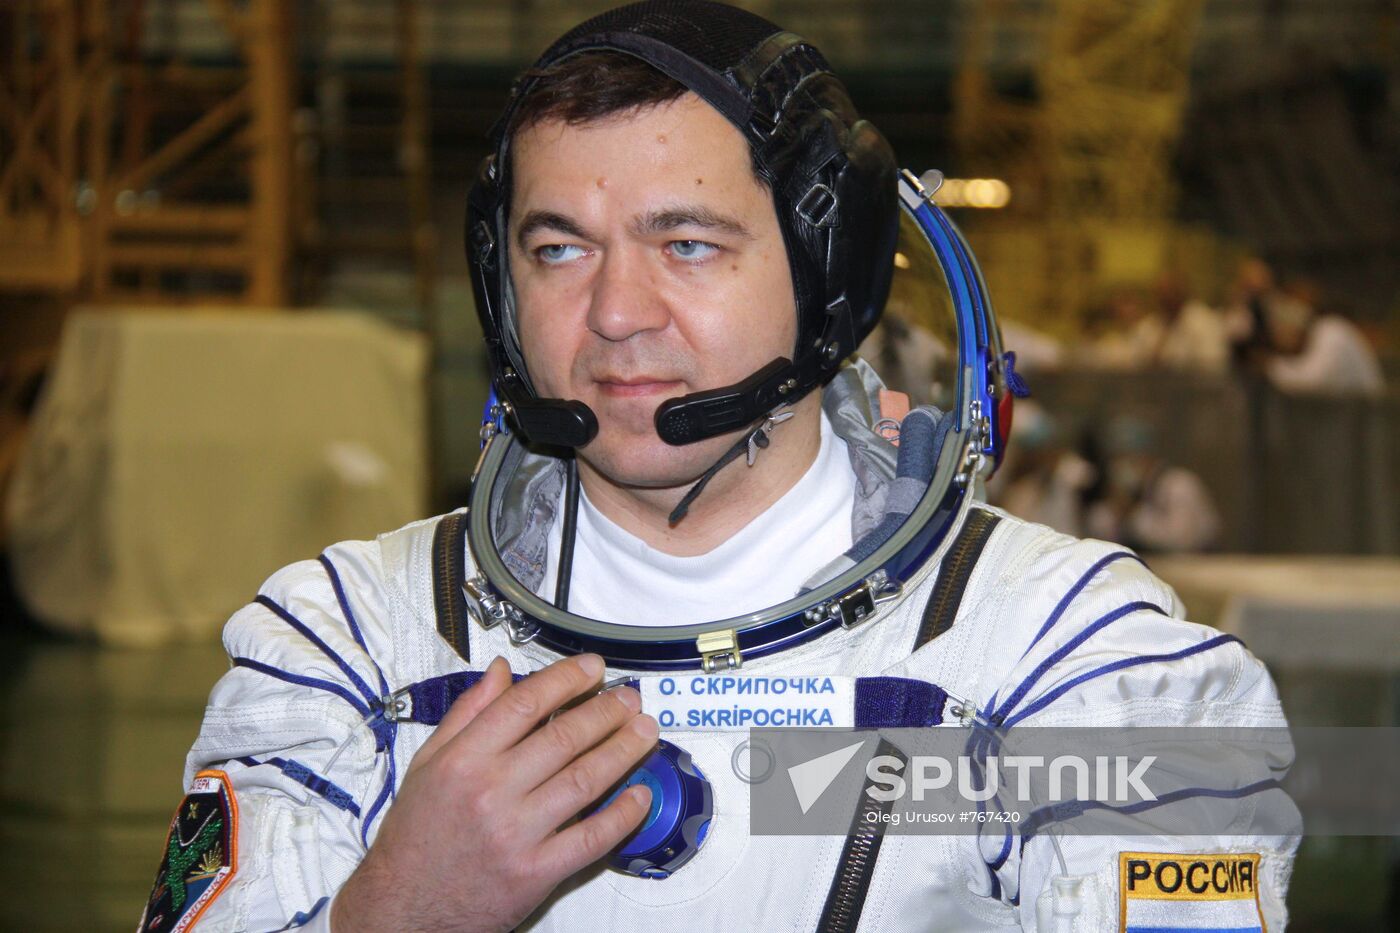 Russian cosmonaut Oleg Skripochka